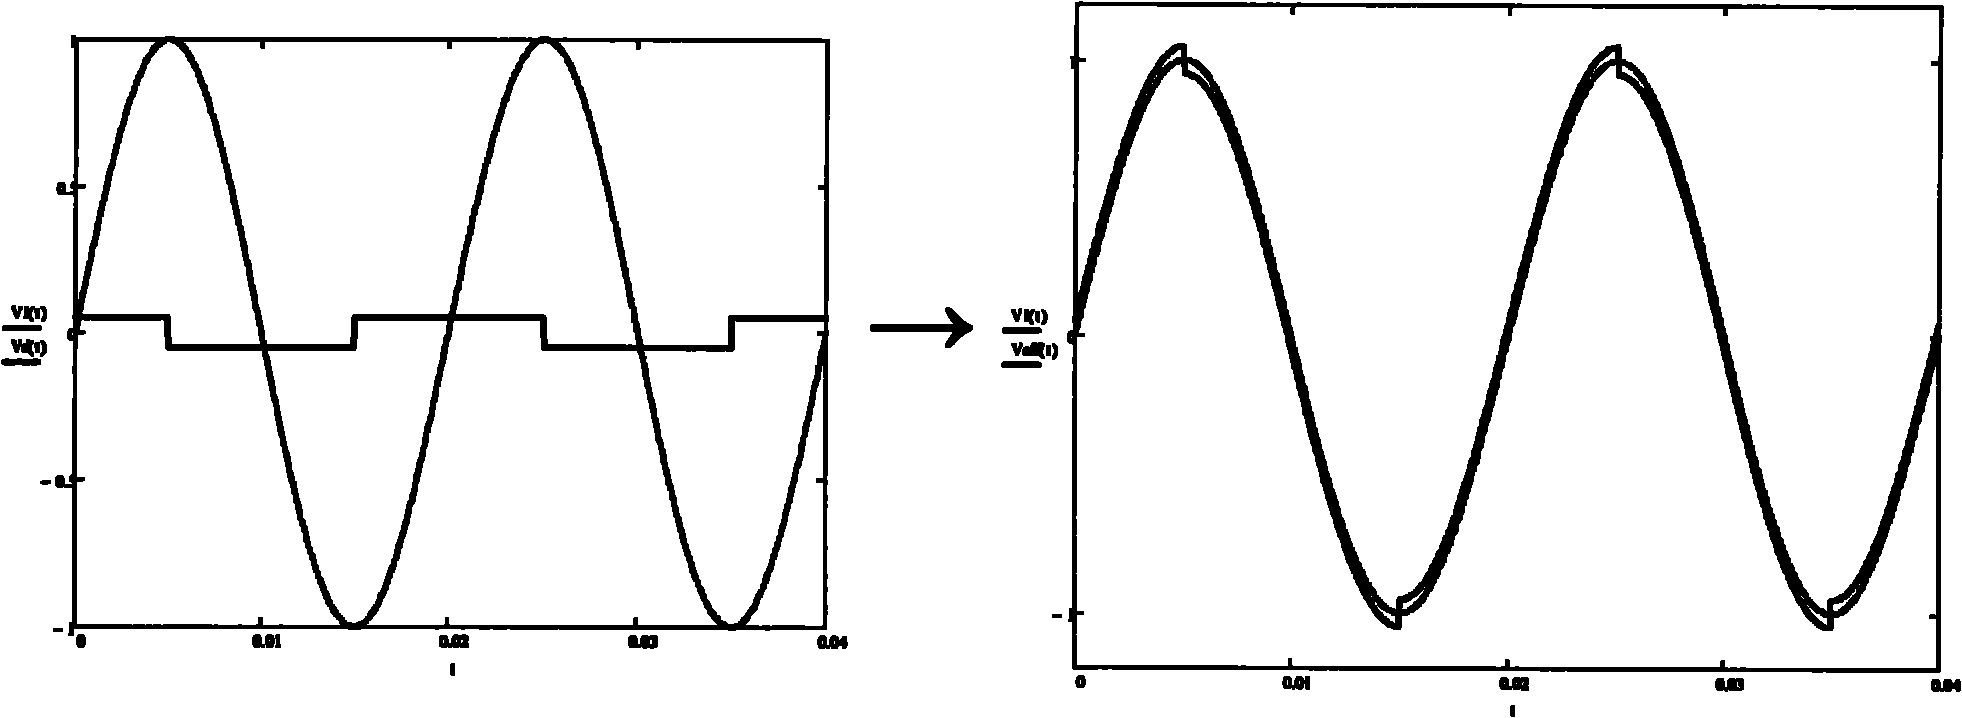 Method for compensating dead time of converter based on distortion function